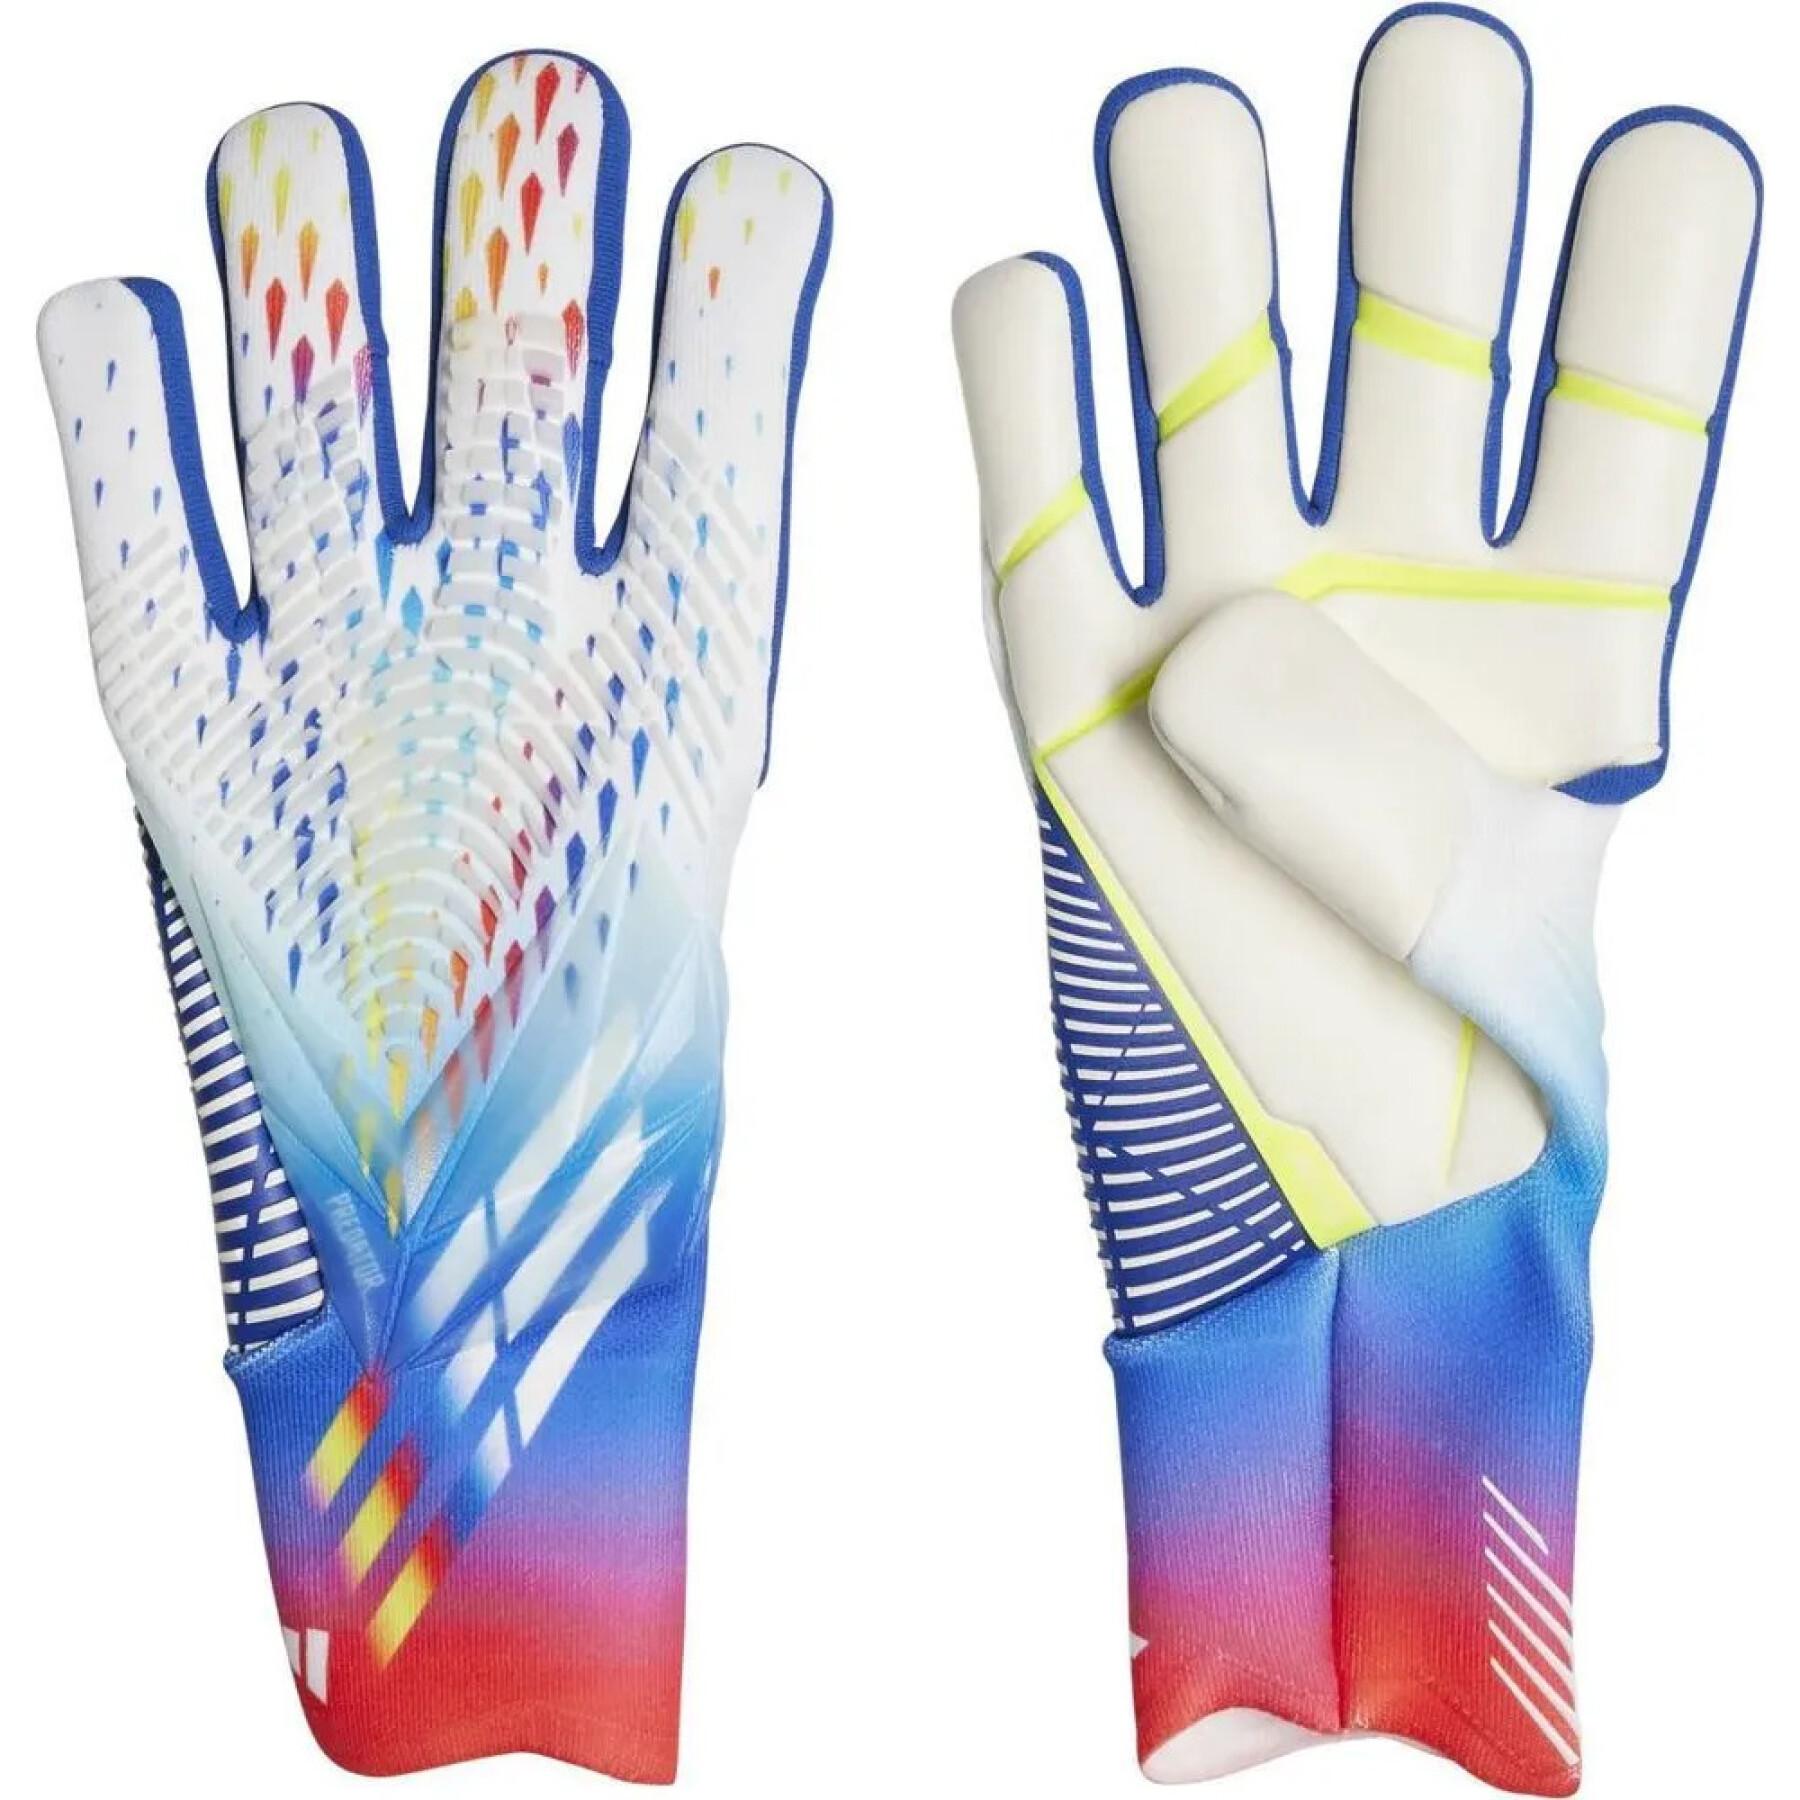 Goalkeeper gloves adidas Pred Gl Pro